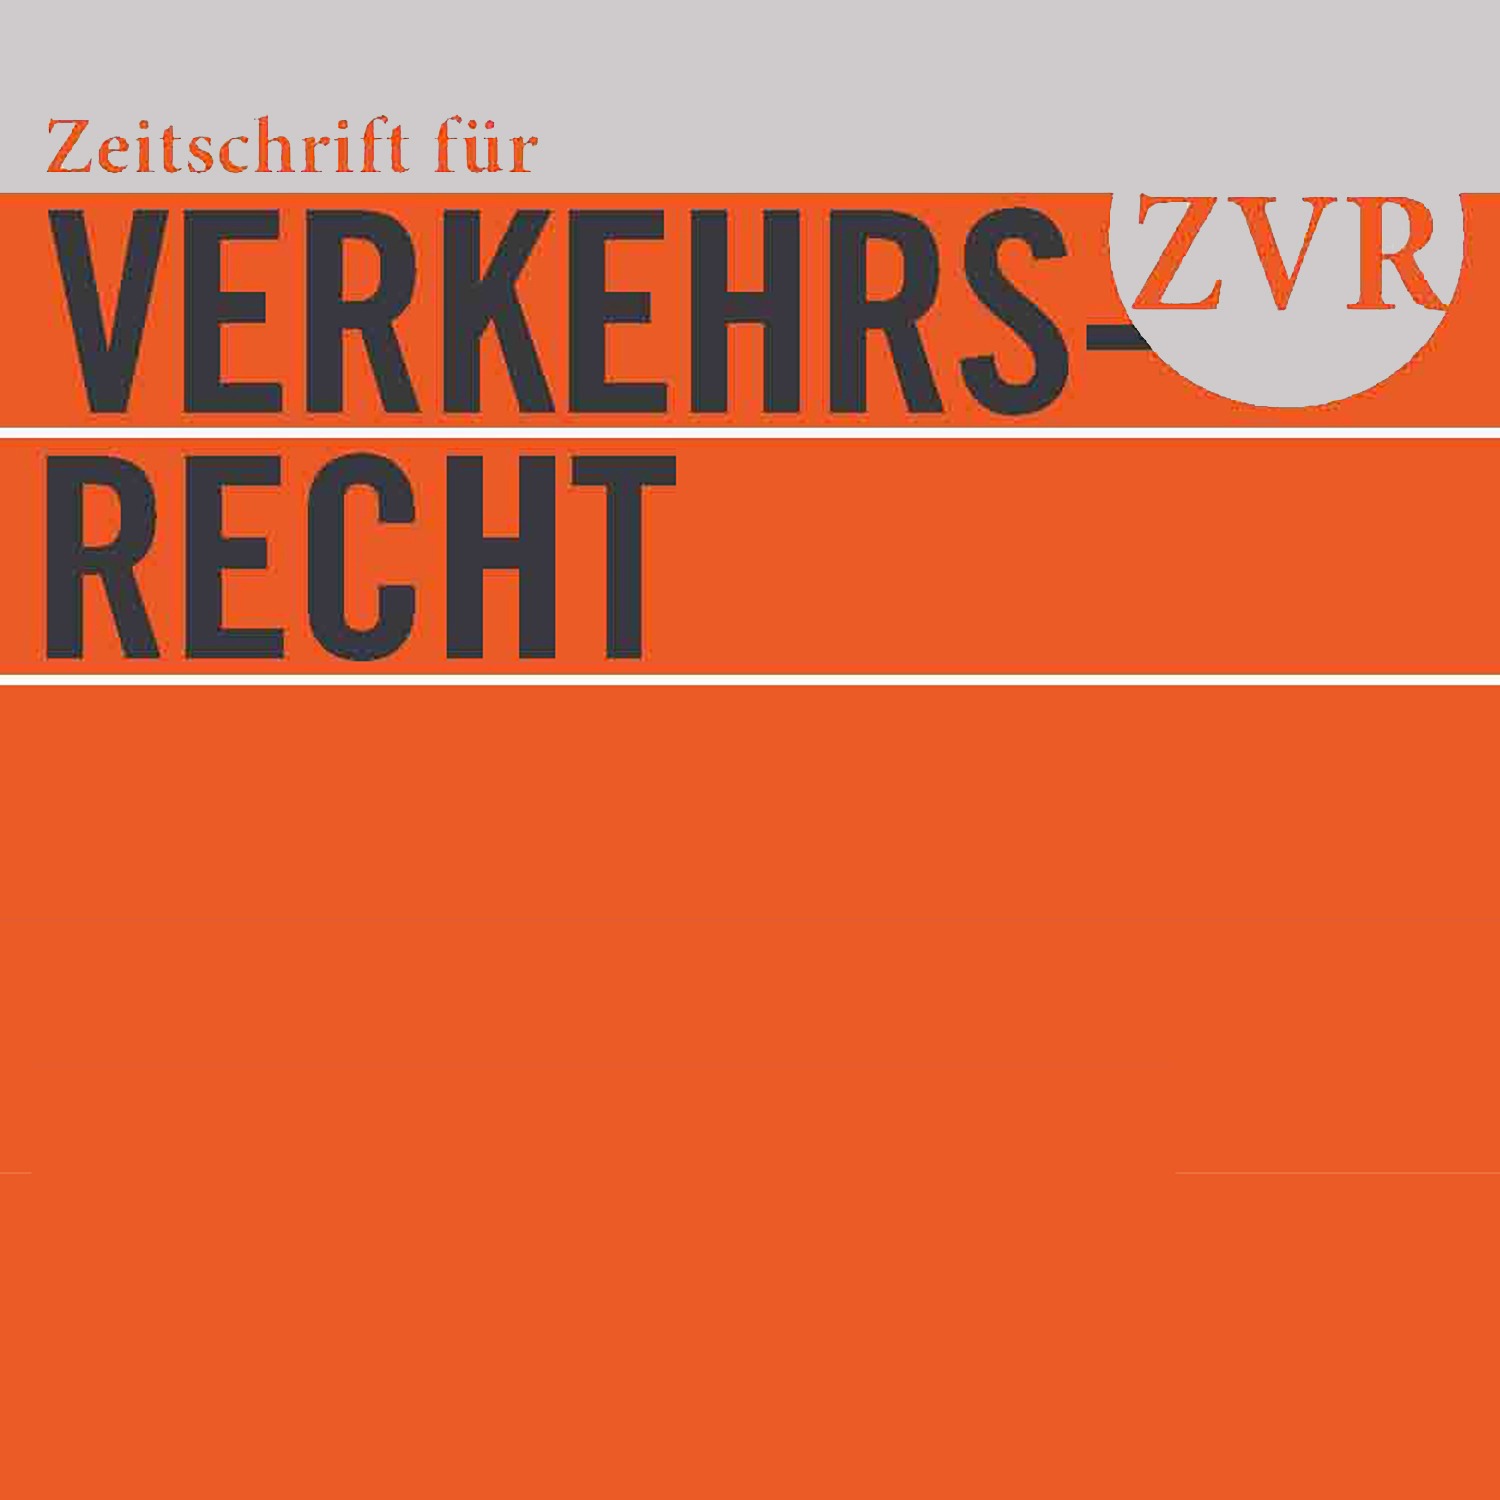 Just published – Automatisiertes Fahren